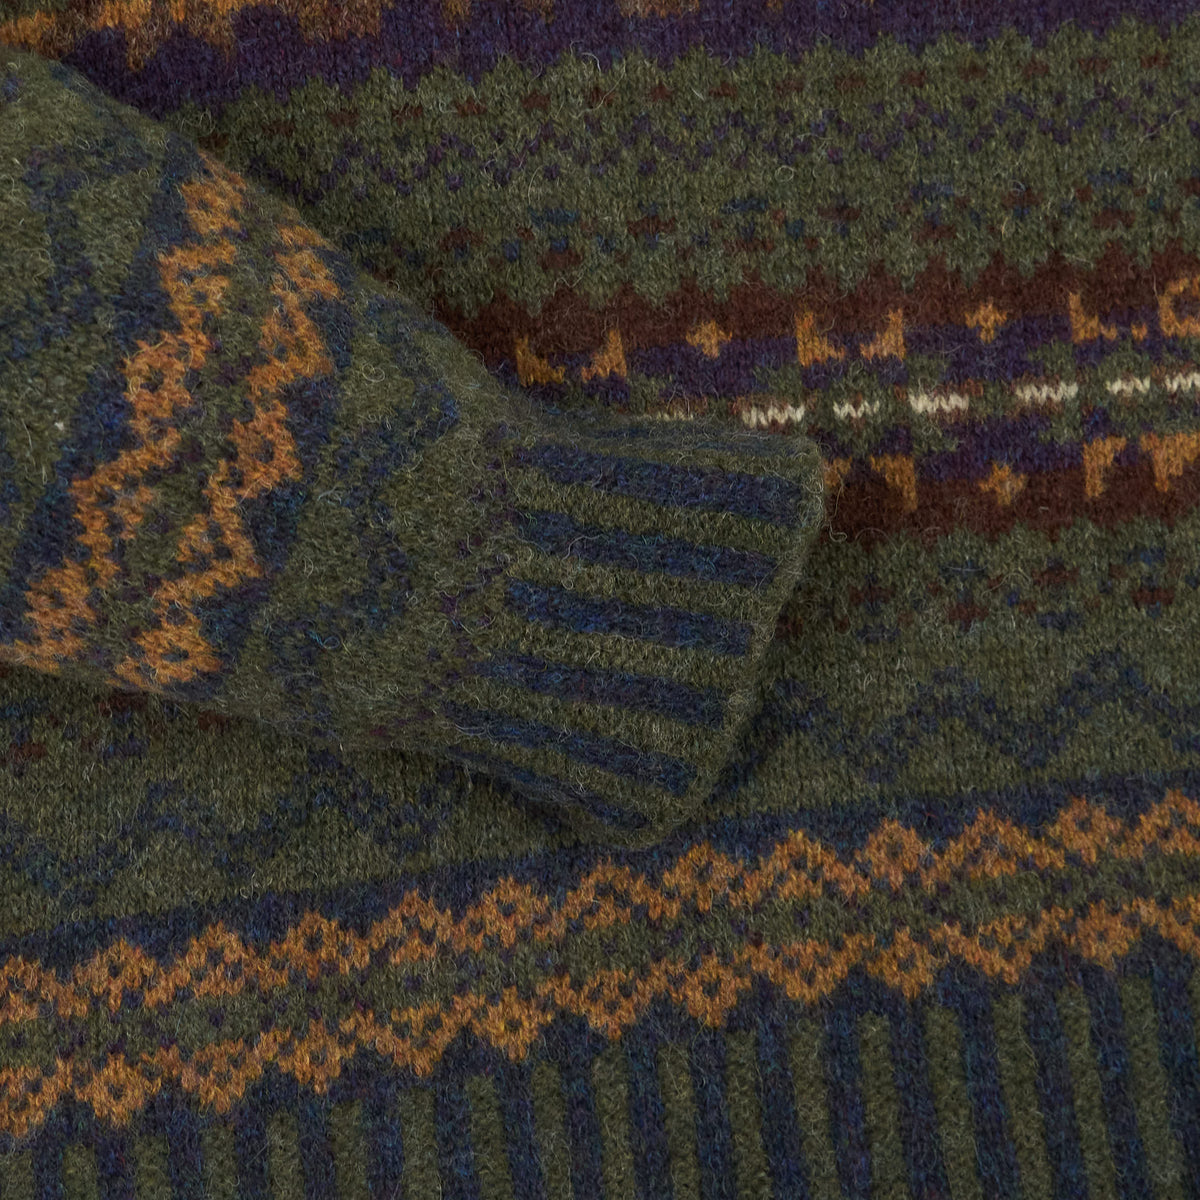 Eribé Knitwear Fair Isle Crew Neck  Wool Sweater